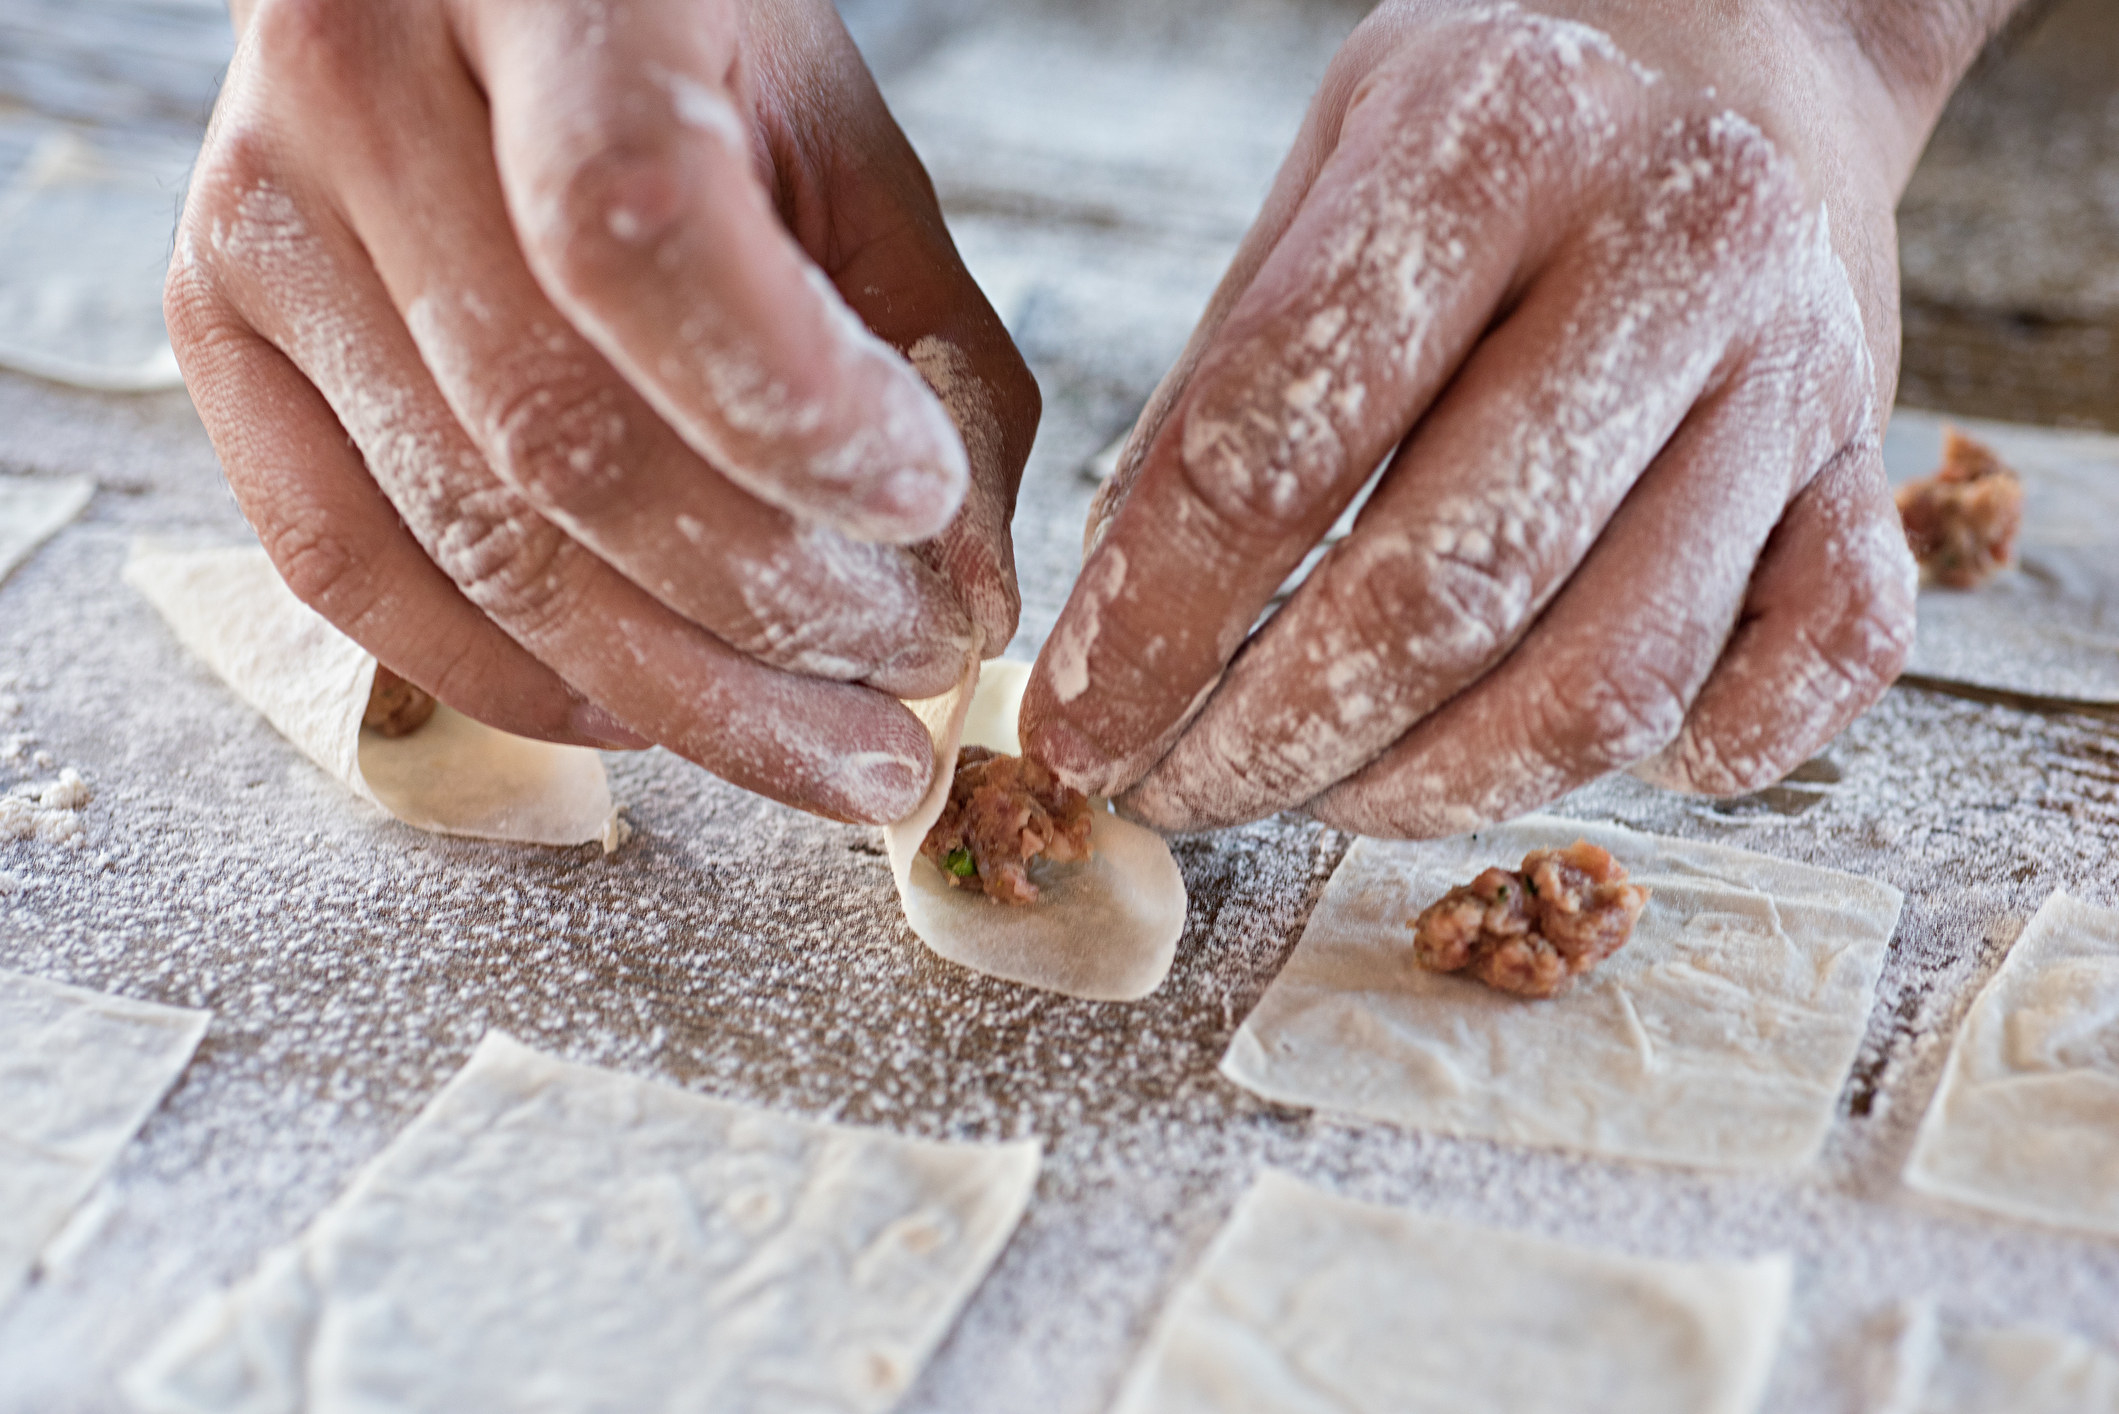 Hands shaping tortellini.